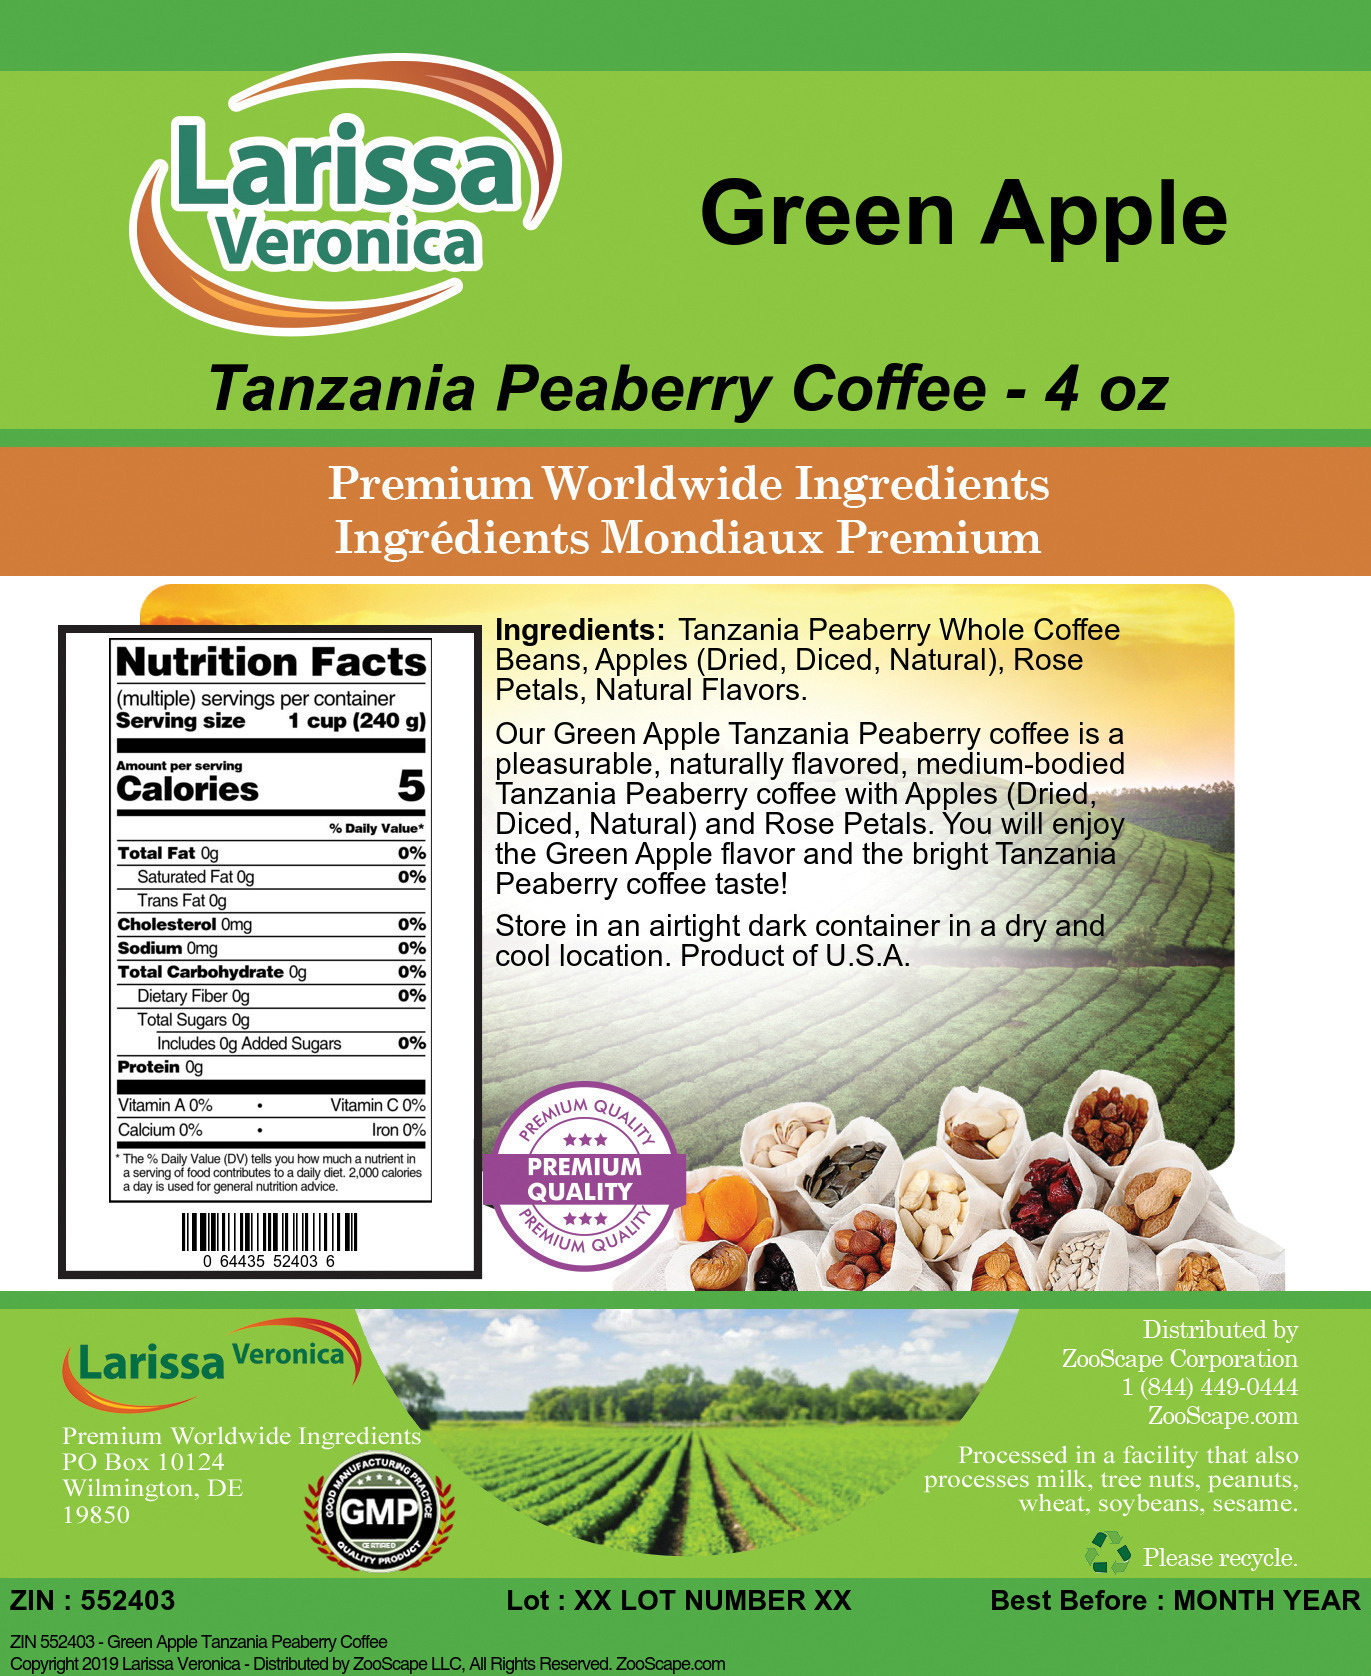 Green Apple Tanzania Peaberry Coffee - Label